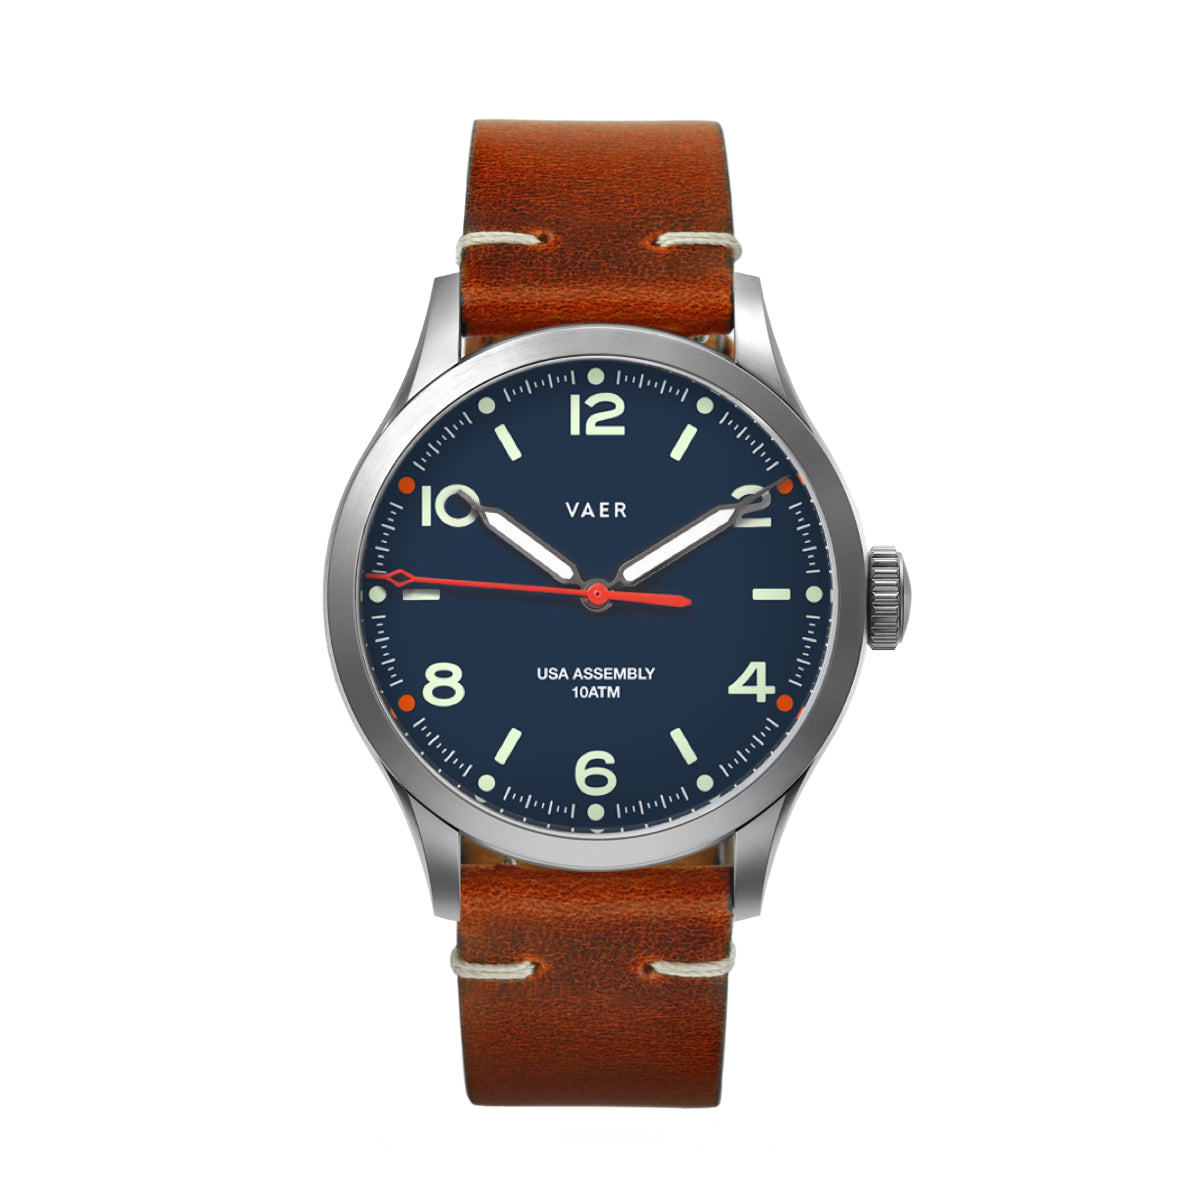 Vaer D5 Atlantic] latest micro-brand buy : r/Watches